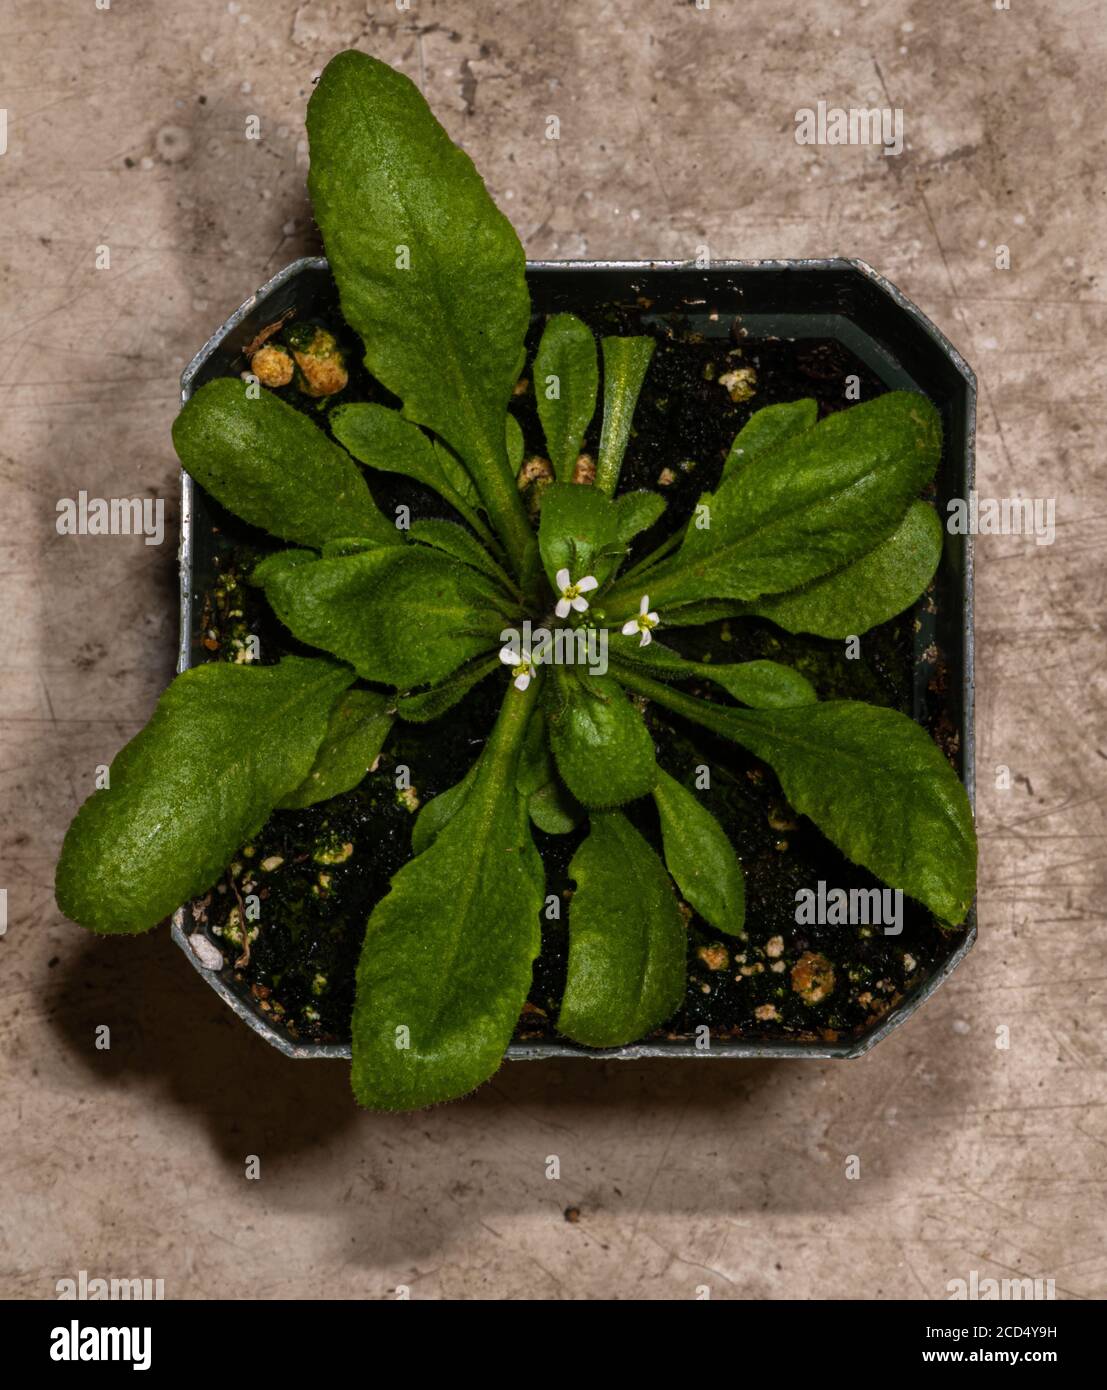 Thale Cress (Arabidopsis thaliana) Plant Starting to Flower Stock Photo